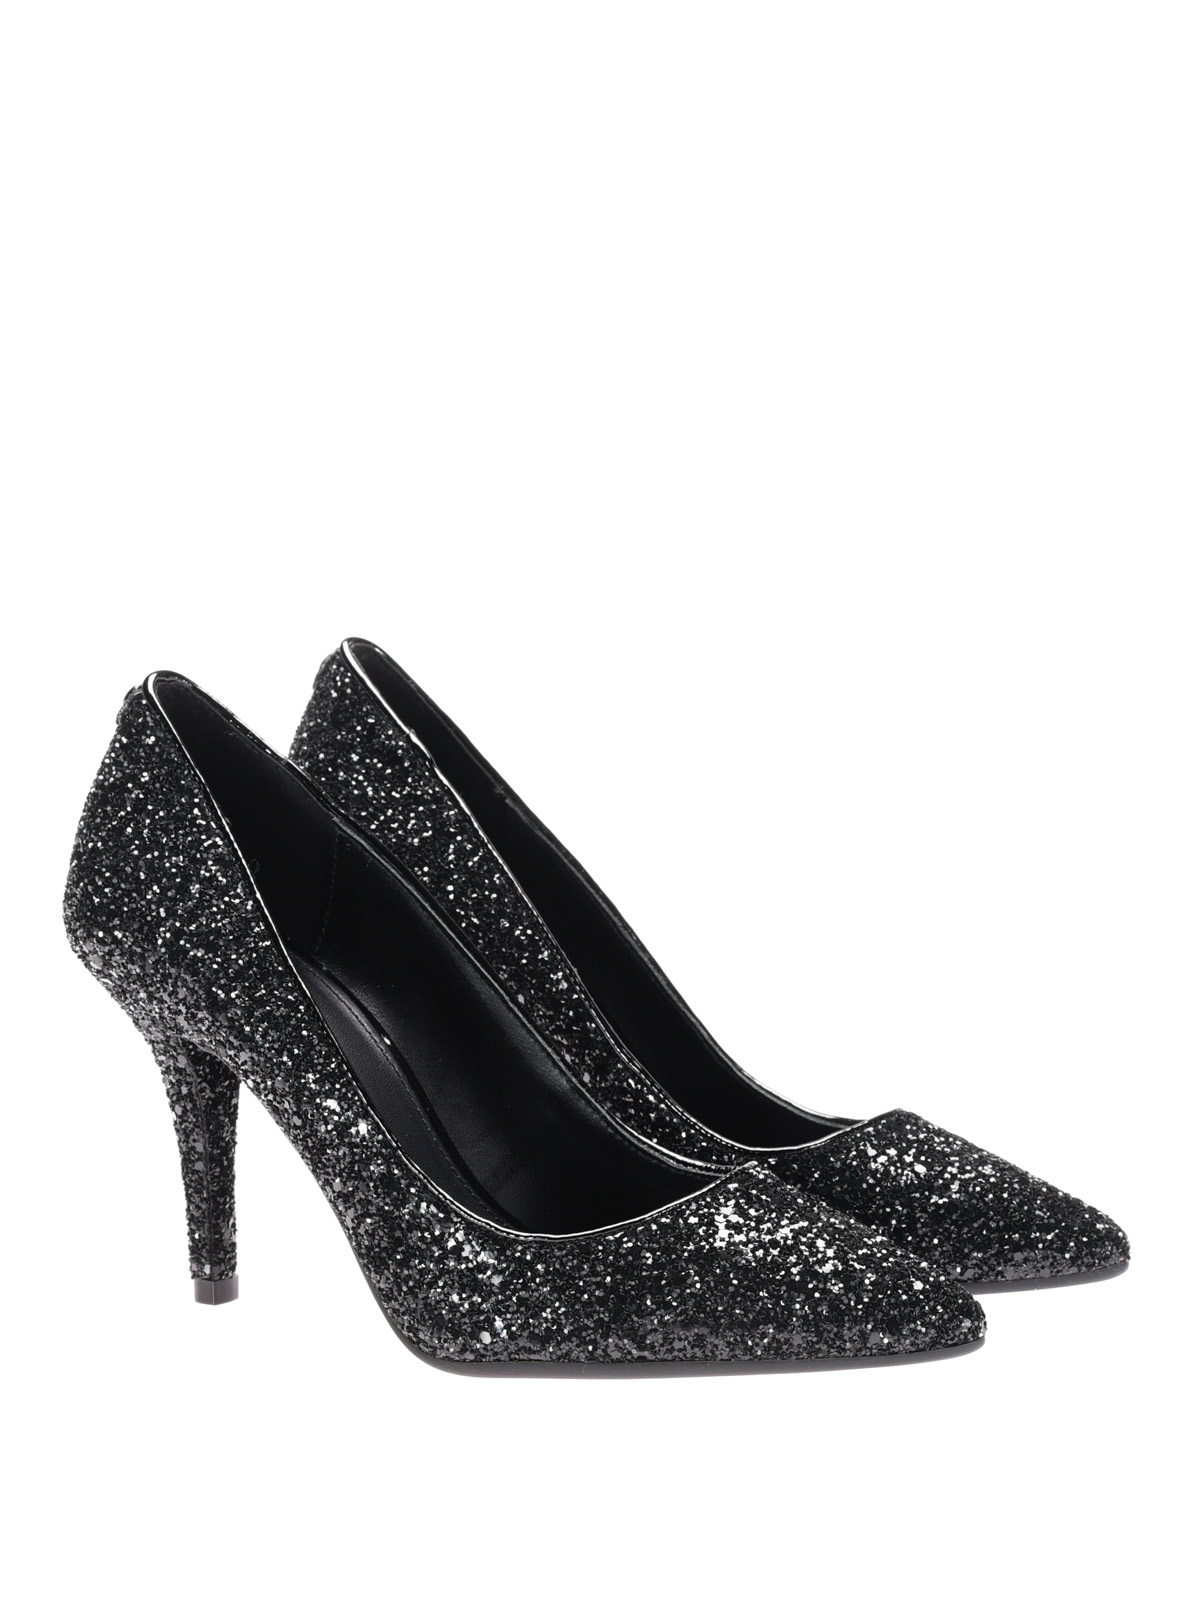 michael kors black sparkly heels